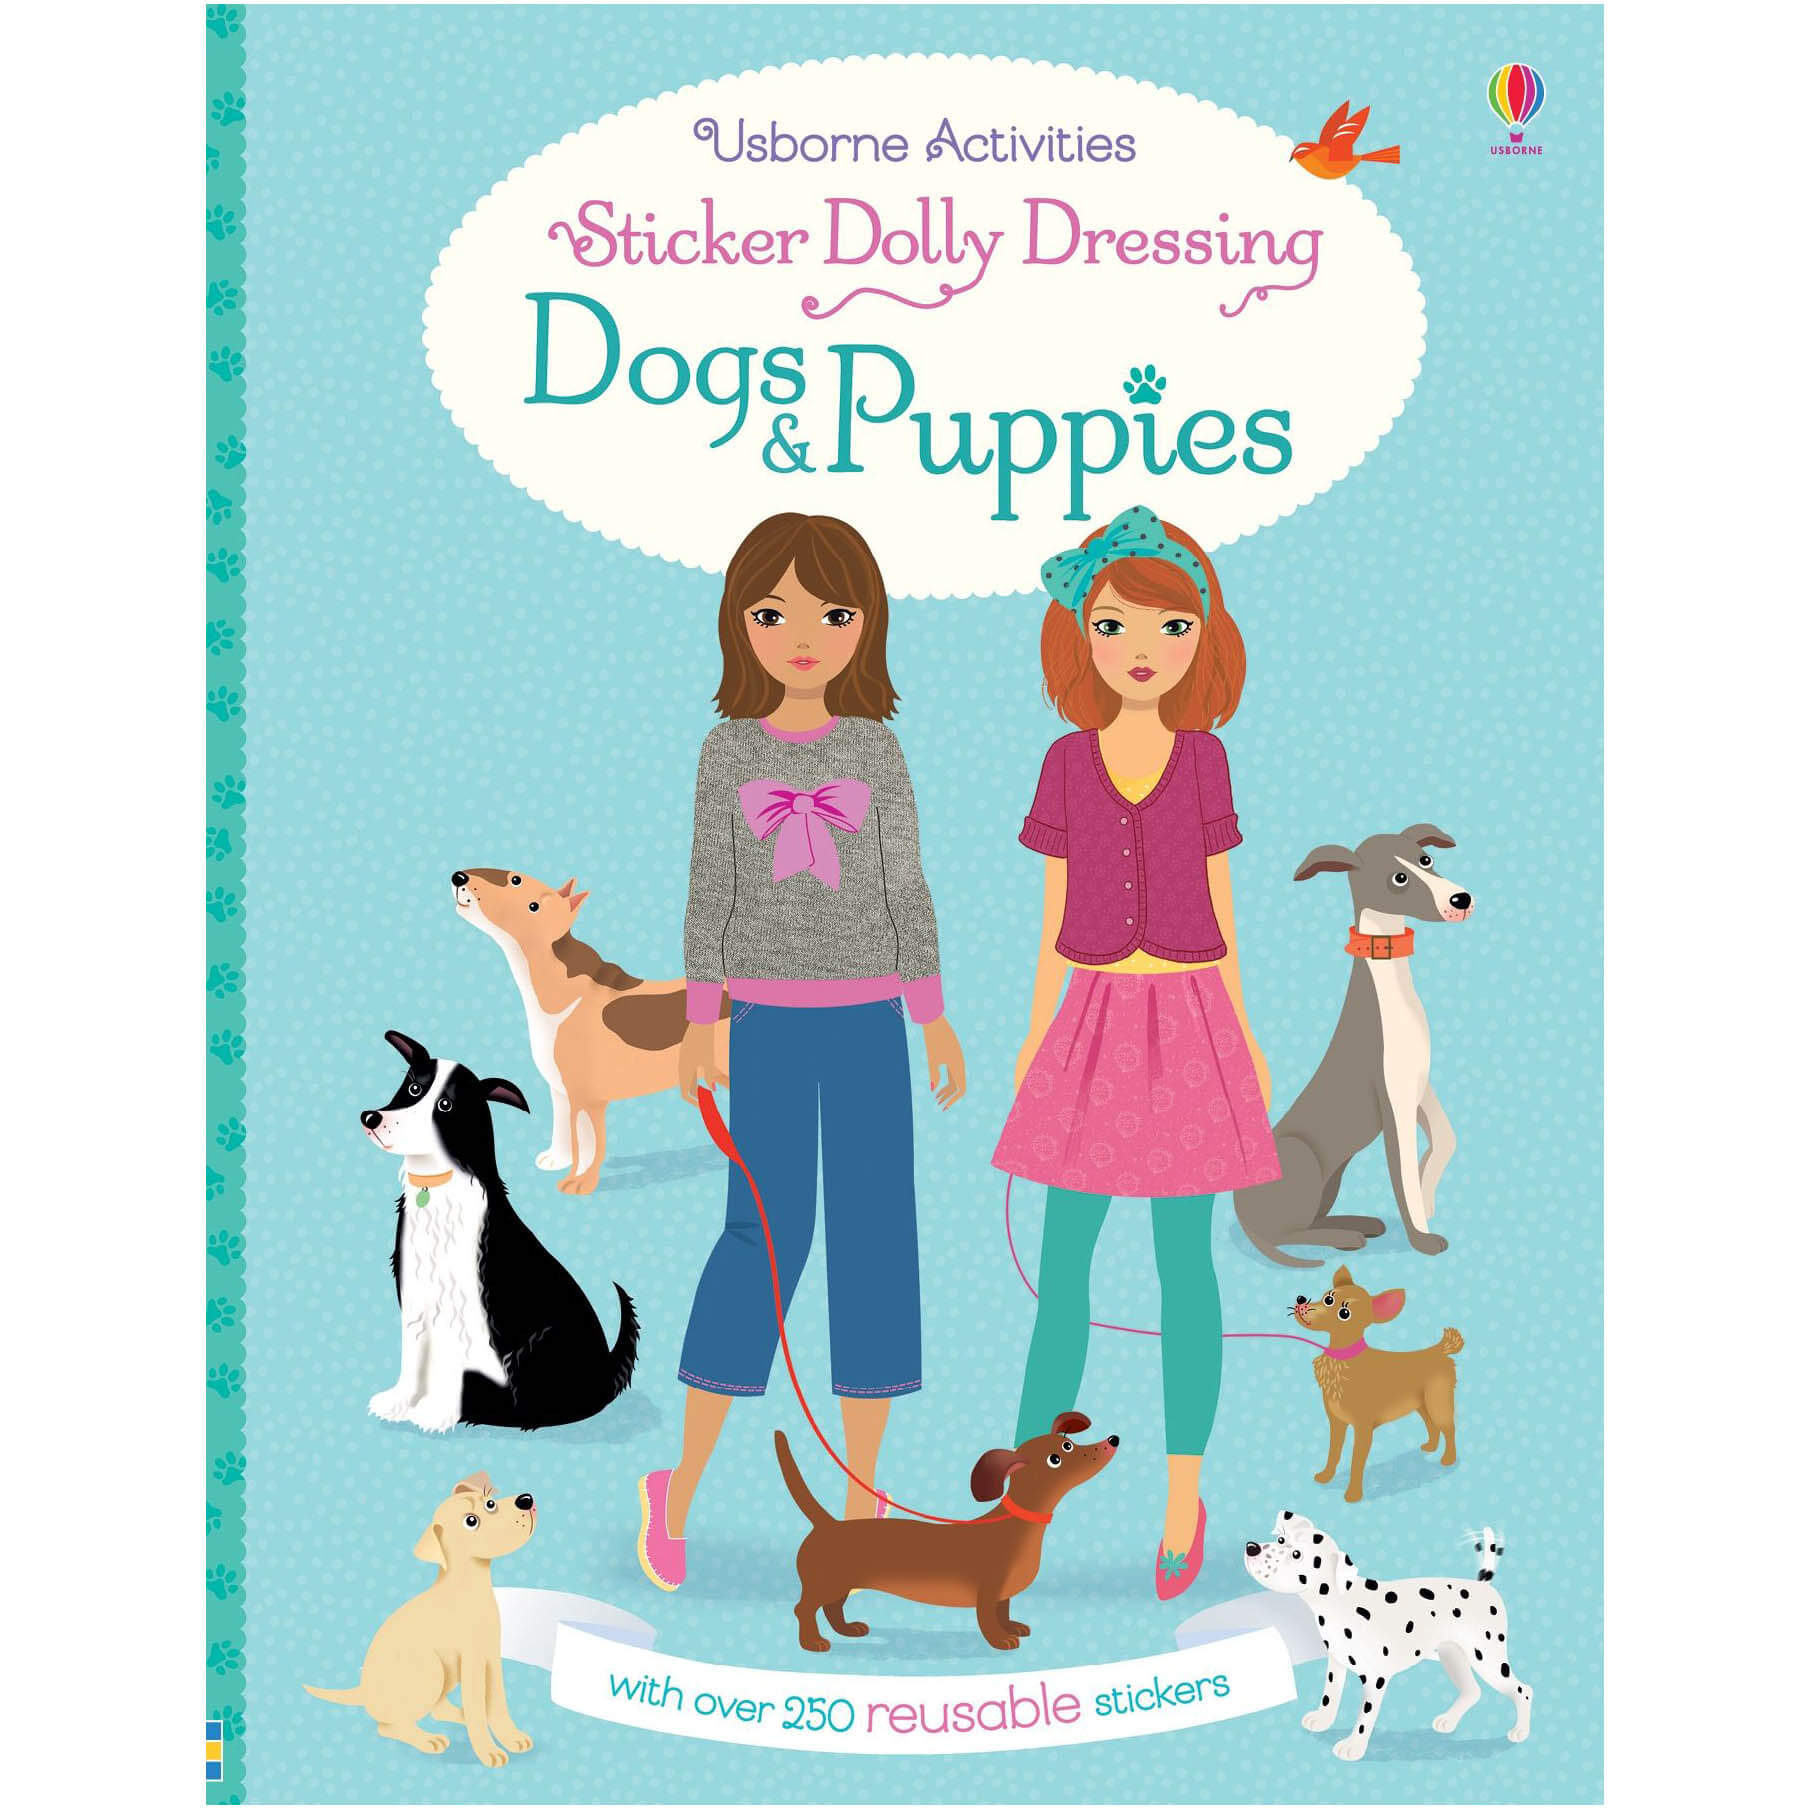 Usborne Sticker Dolly Dressing Dogs & Puppies (Sticker Dolly Dressing Books)